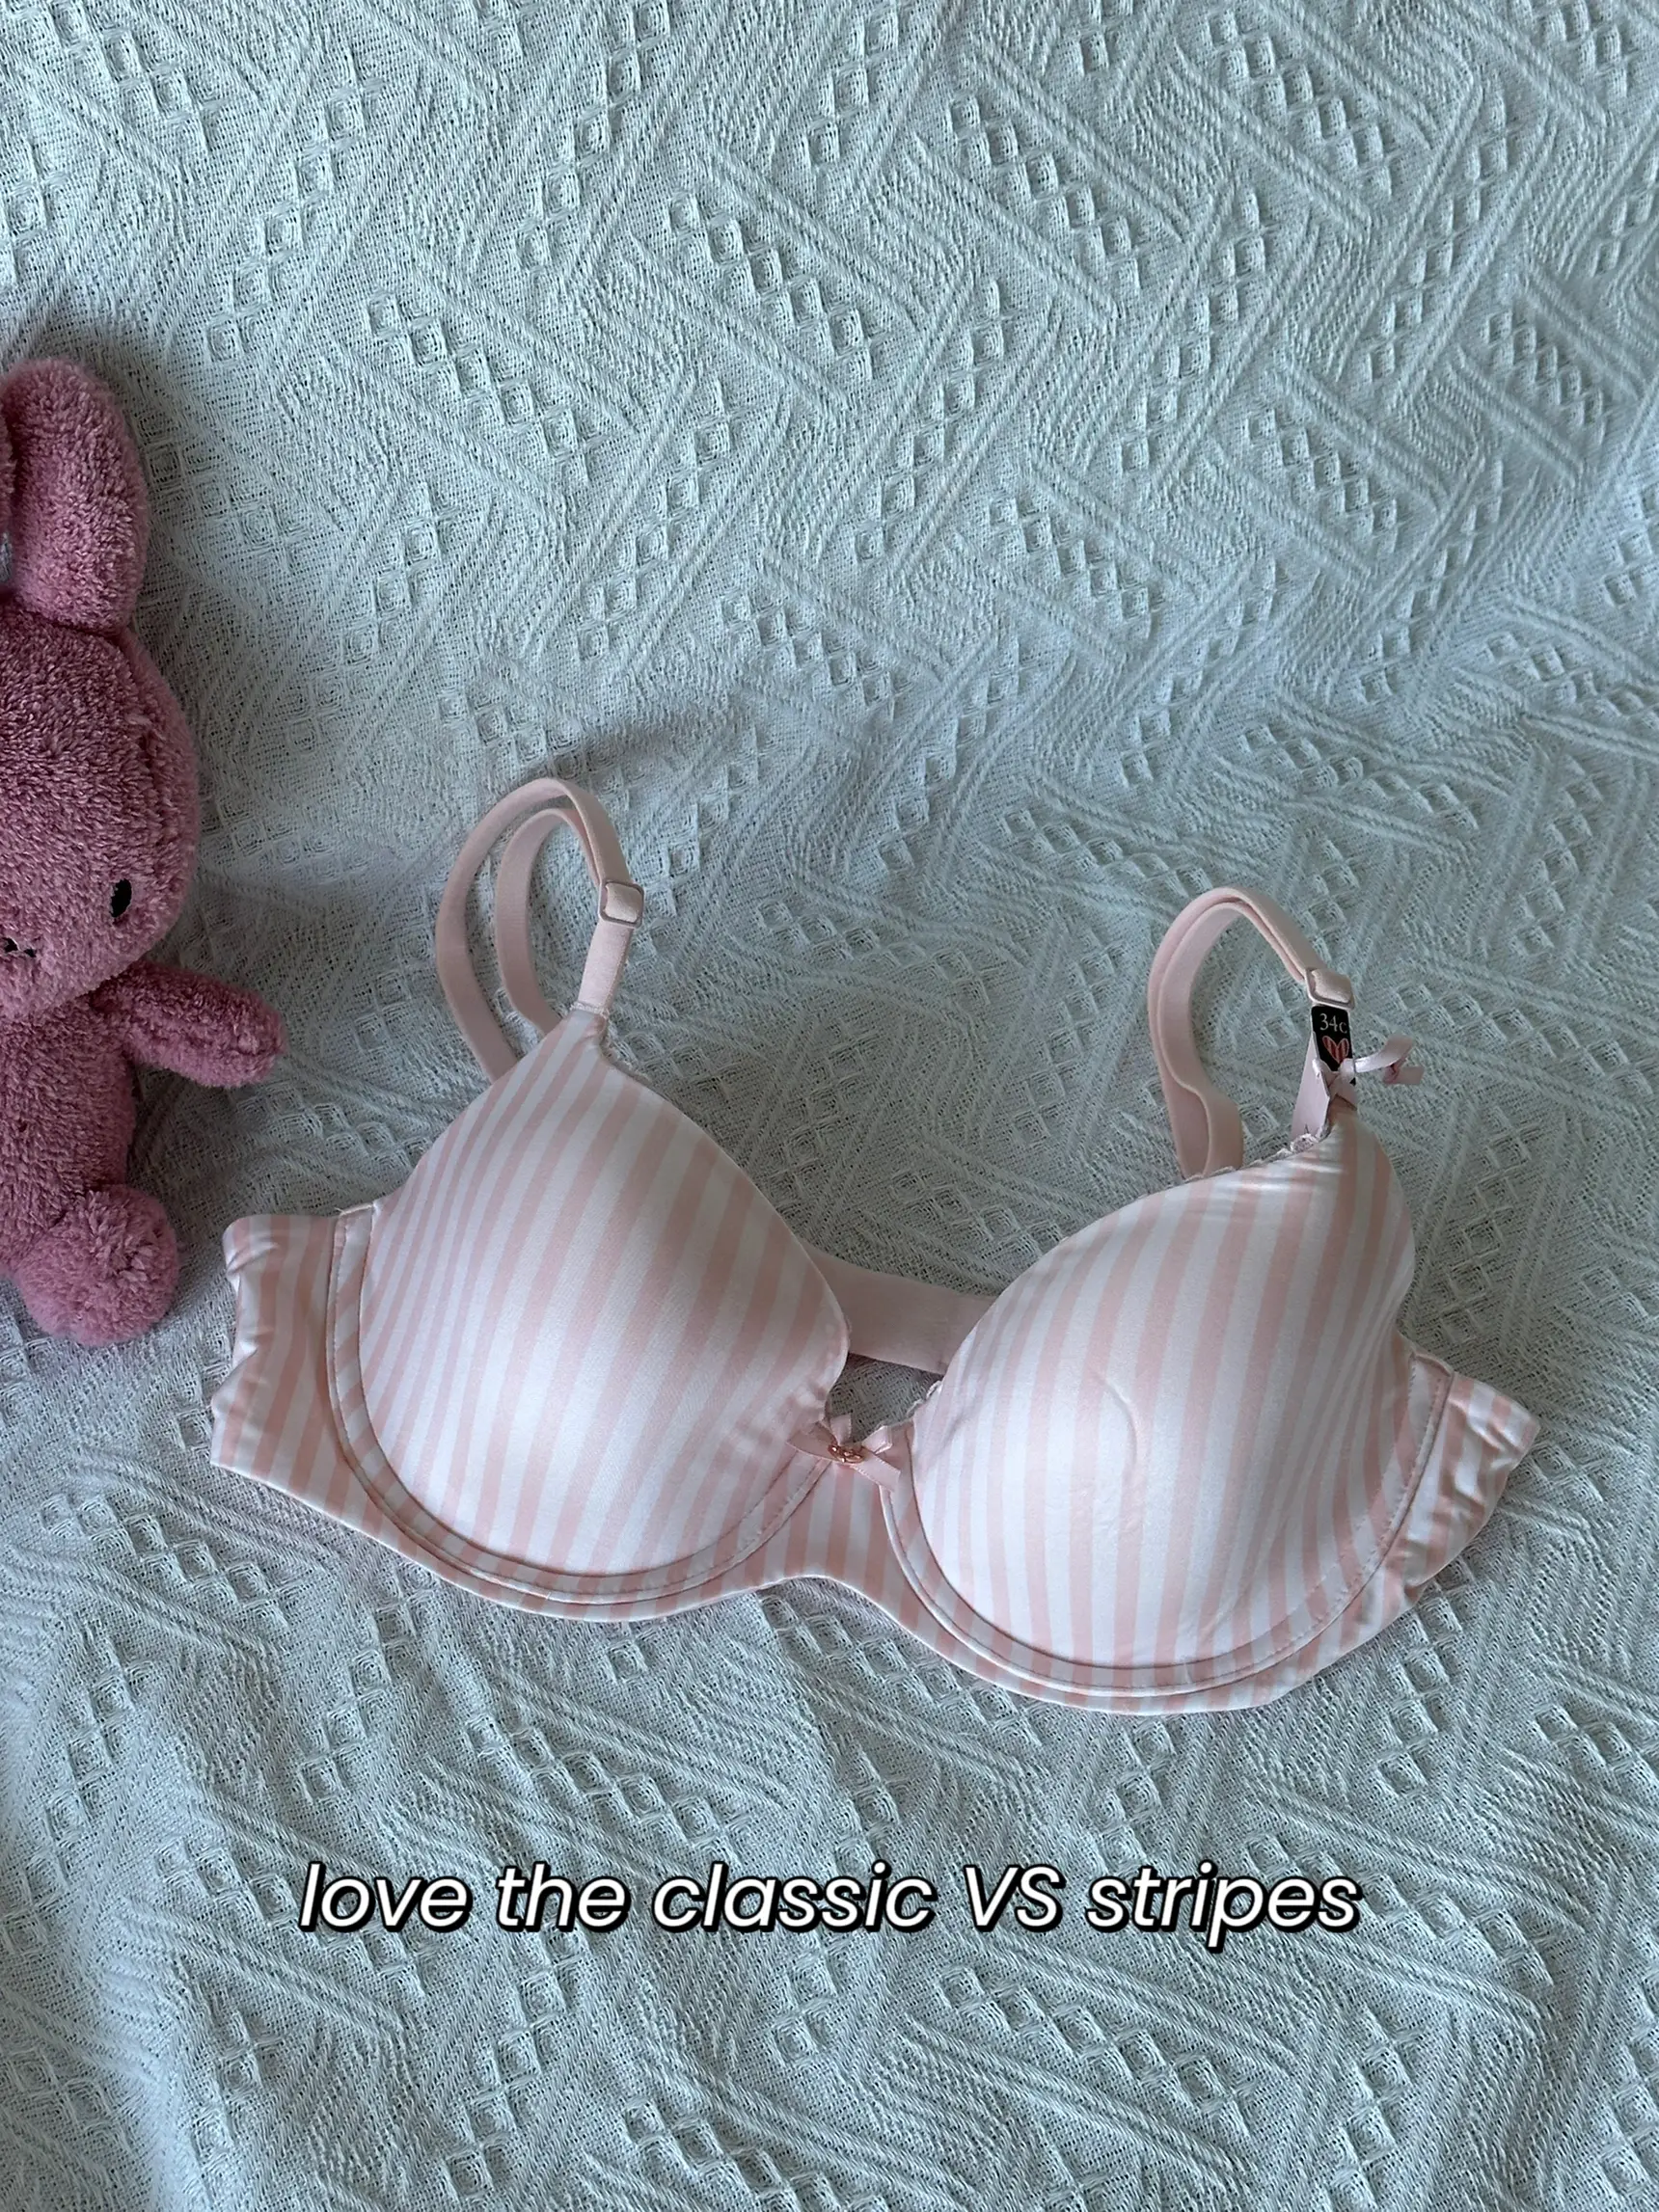 Used bra panty photos  Panty photos, Victoria secret pink bras, Bra panty